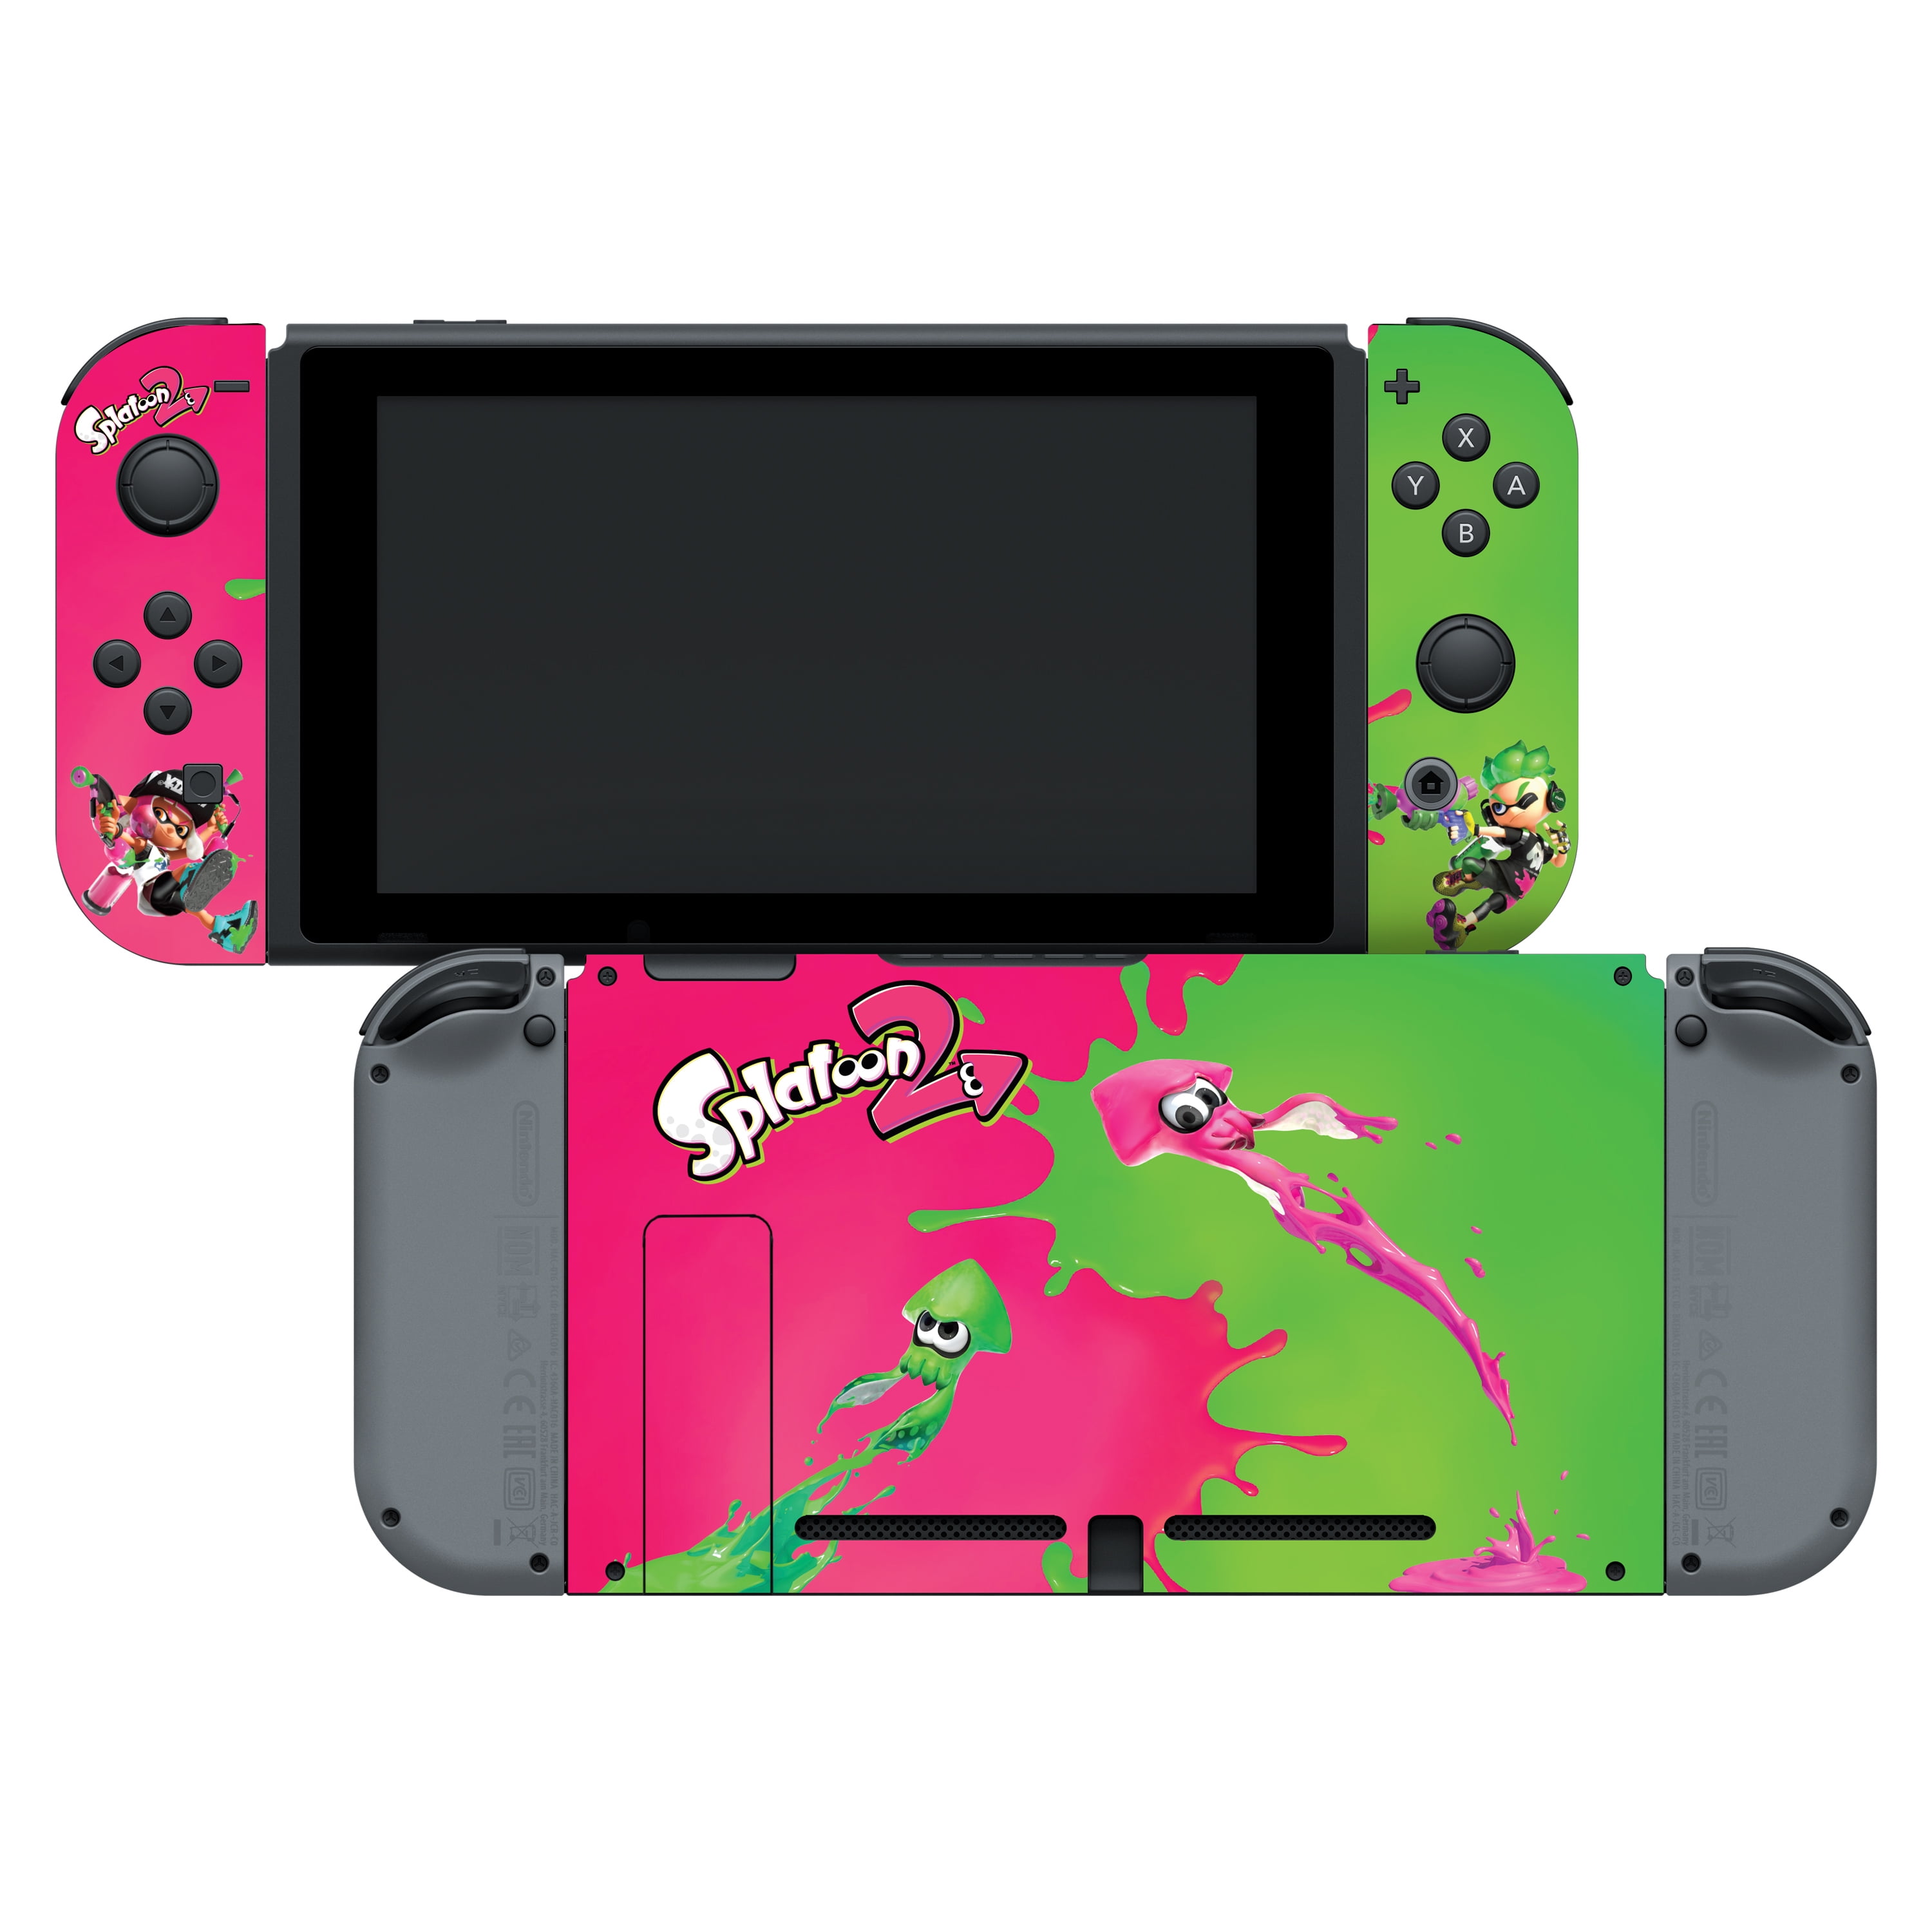 Nintendo splatoon 3. Nintendo Switch Nintendo Splatoon 2. Nintendo Switch зеленый. Игровая приставка Nintendo Switch OLED 64 ГБ, Splatoon 3 Edition. Контроллер Nintendo Switch Pro (Splatoon 3).